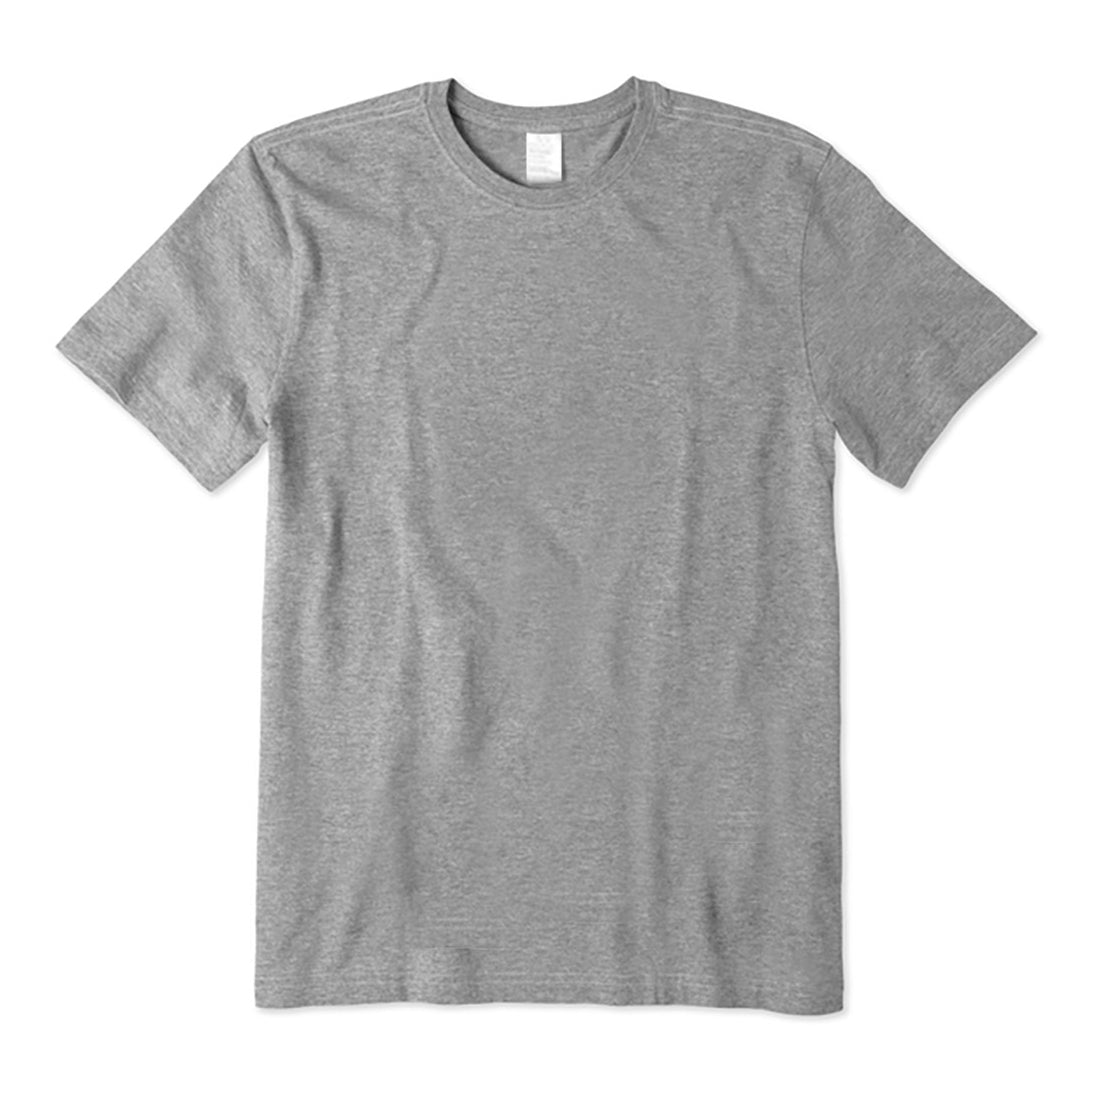 Men's Solid Short Sleeve T-Shirt